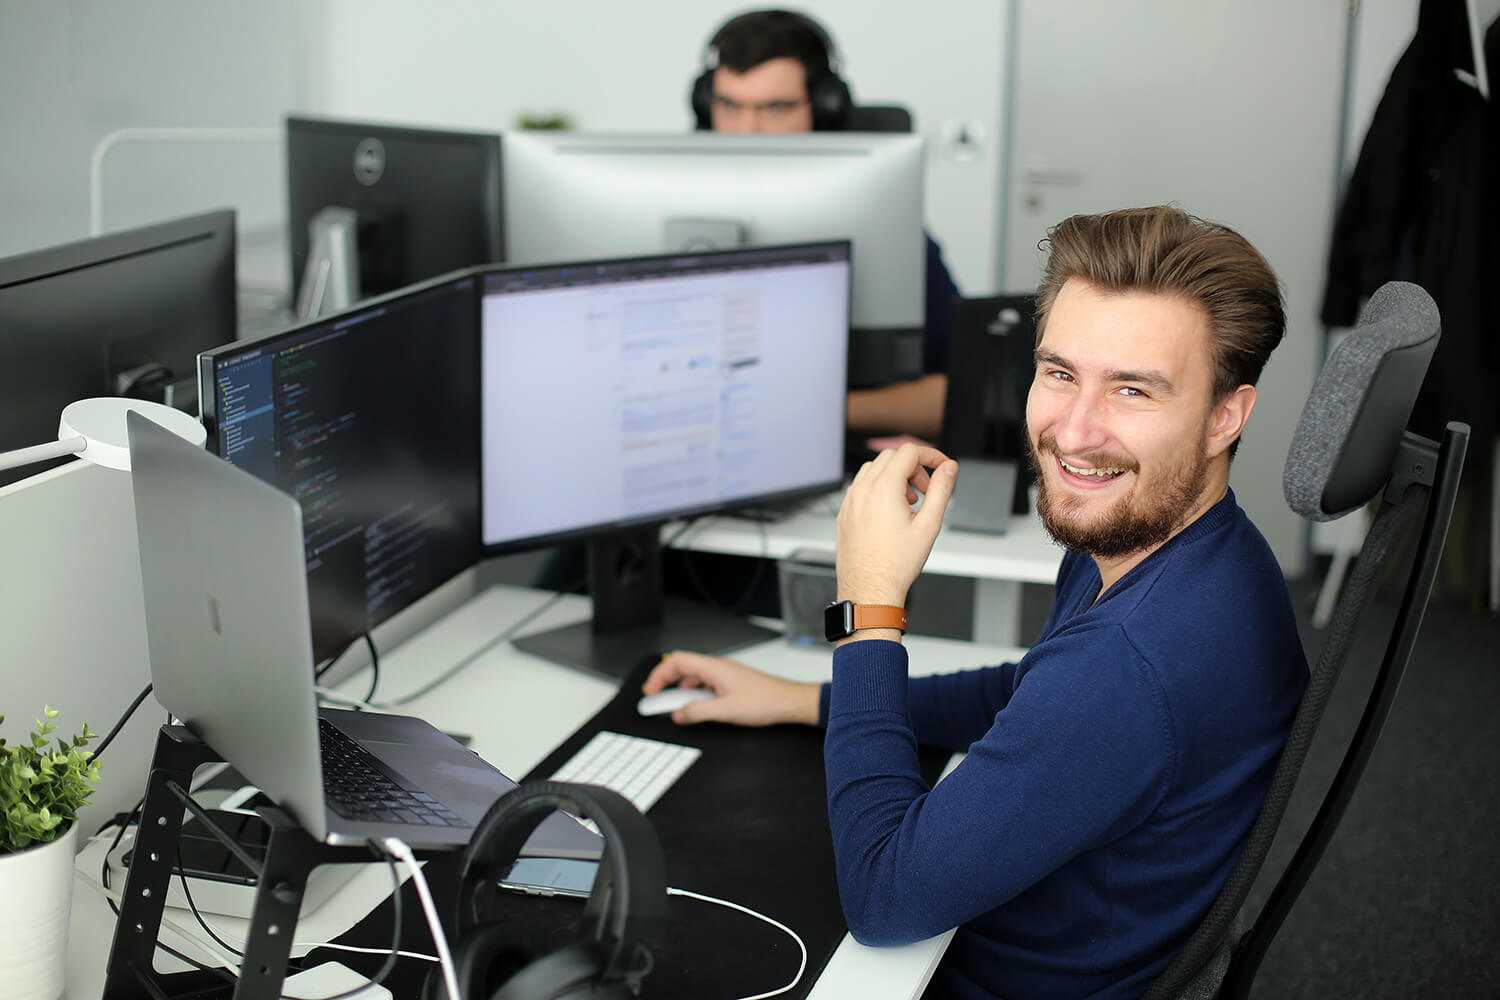 Smiling man on computer